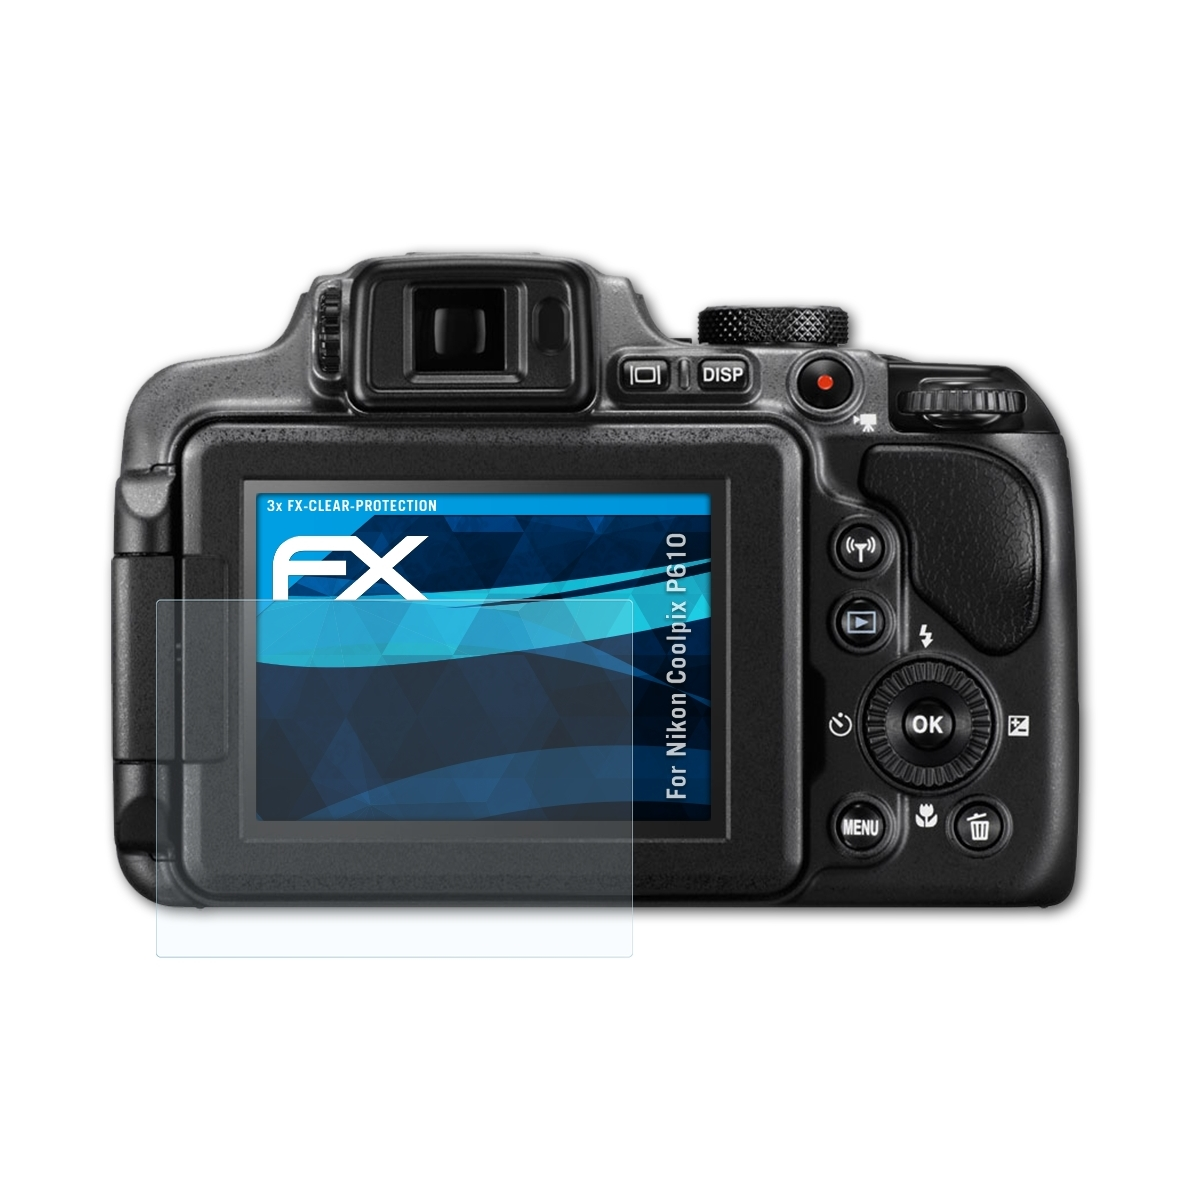 3x FX-Clear P610) Coolpix ATFOLIX Nikon Displayschutz(für